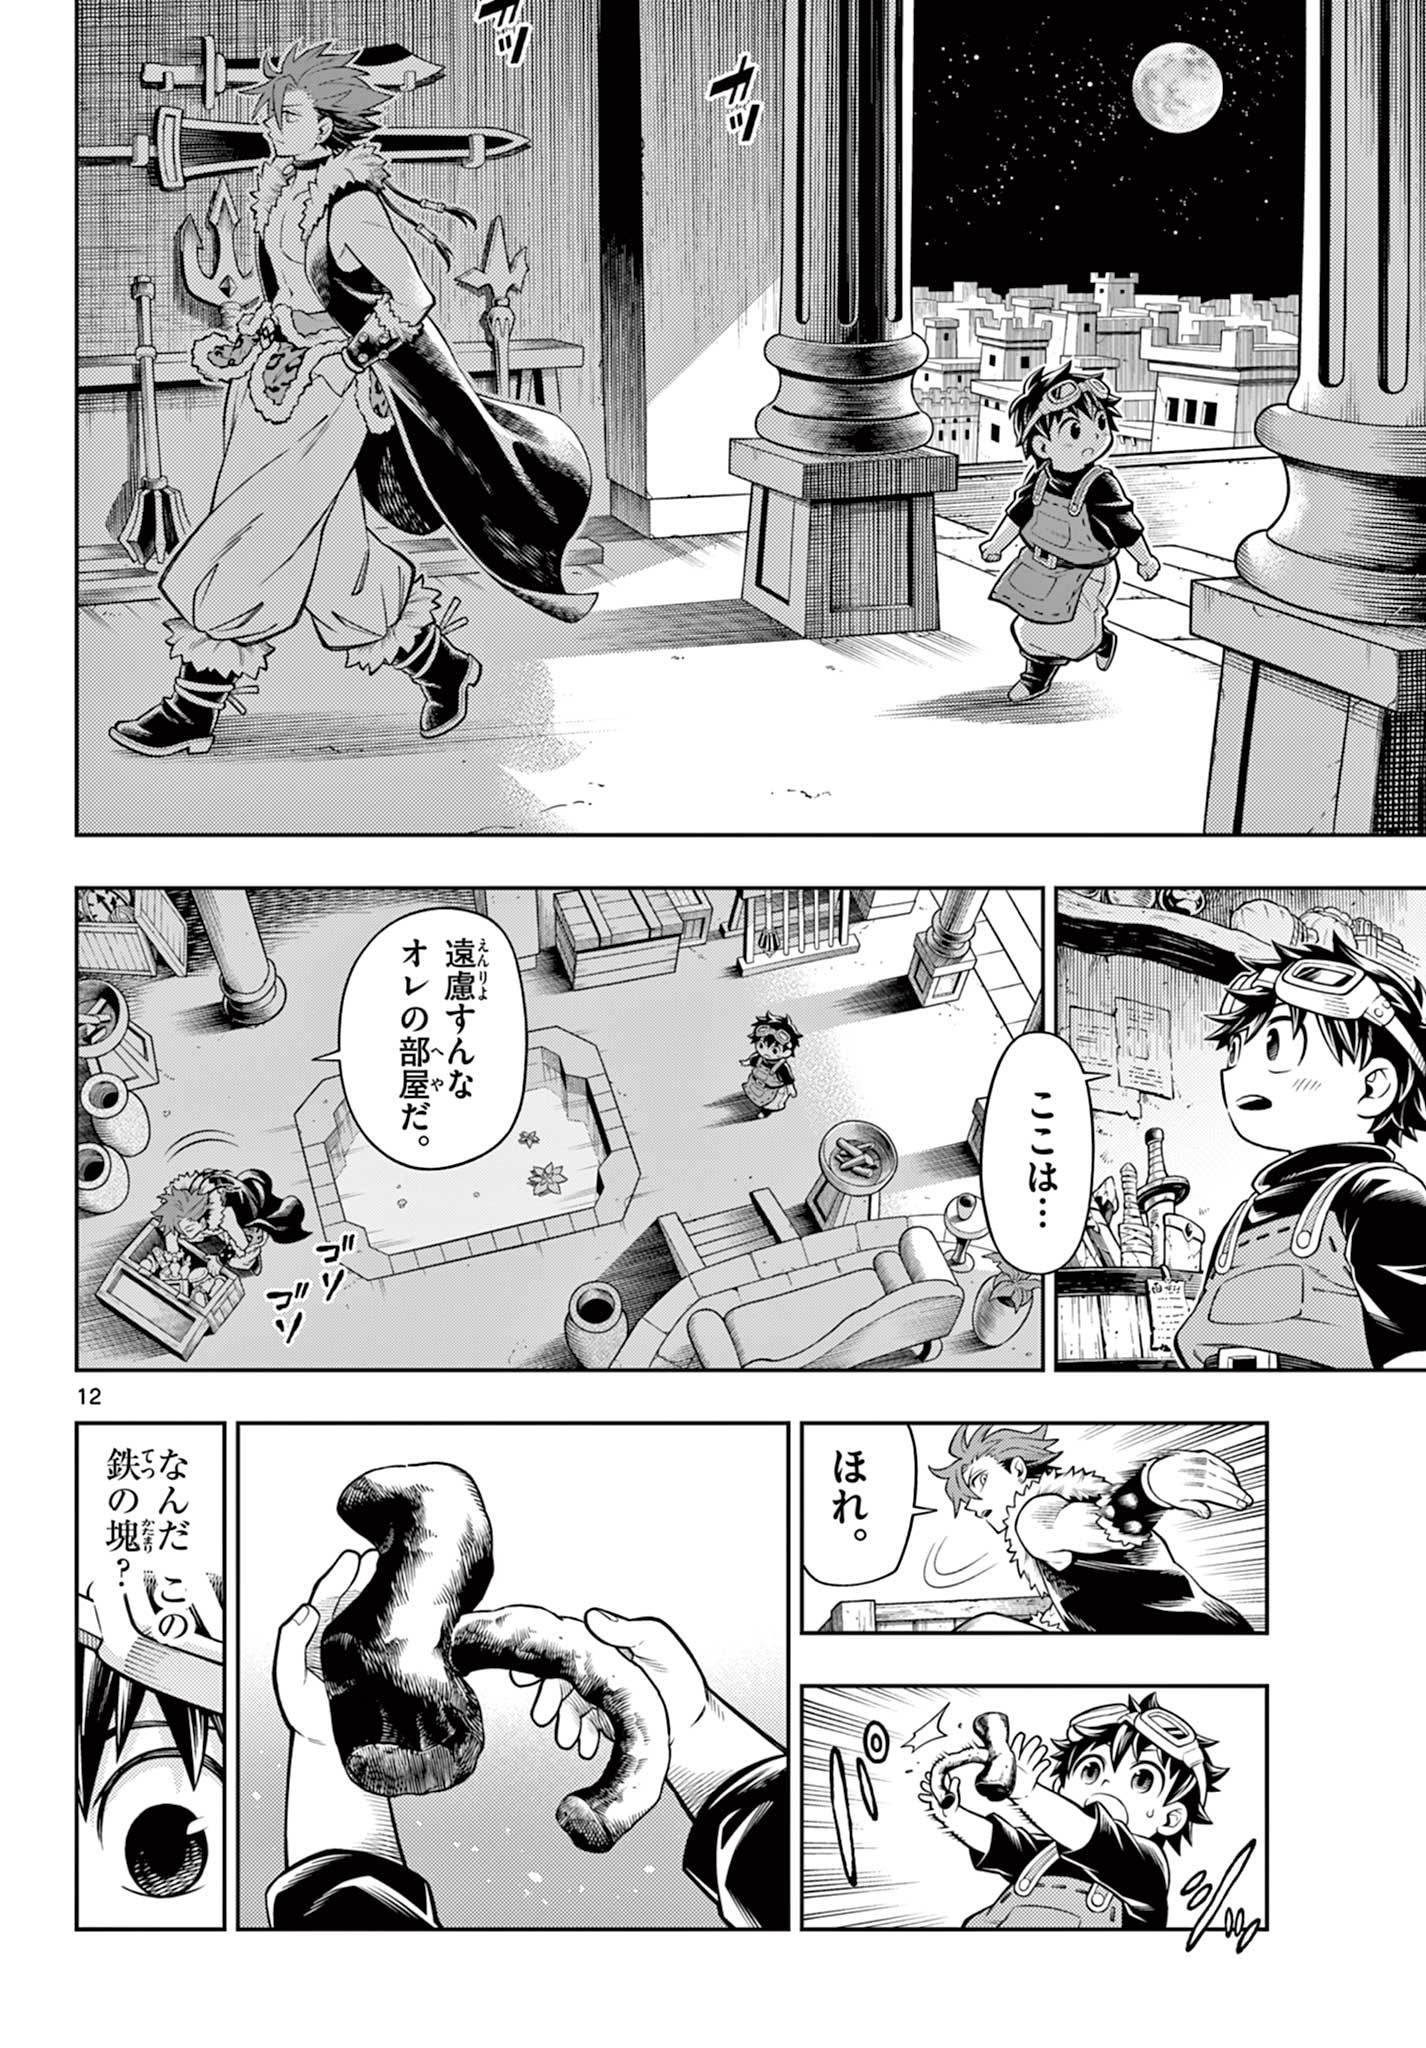 Soara to Mamono no ie - Chapter 23 - Page 12